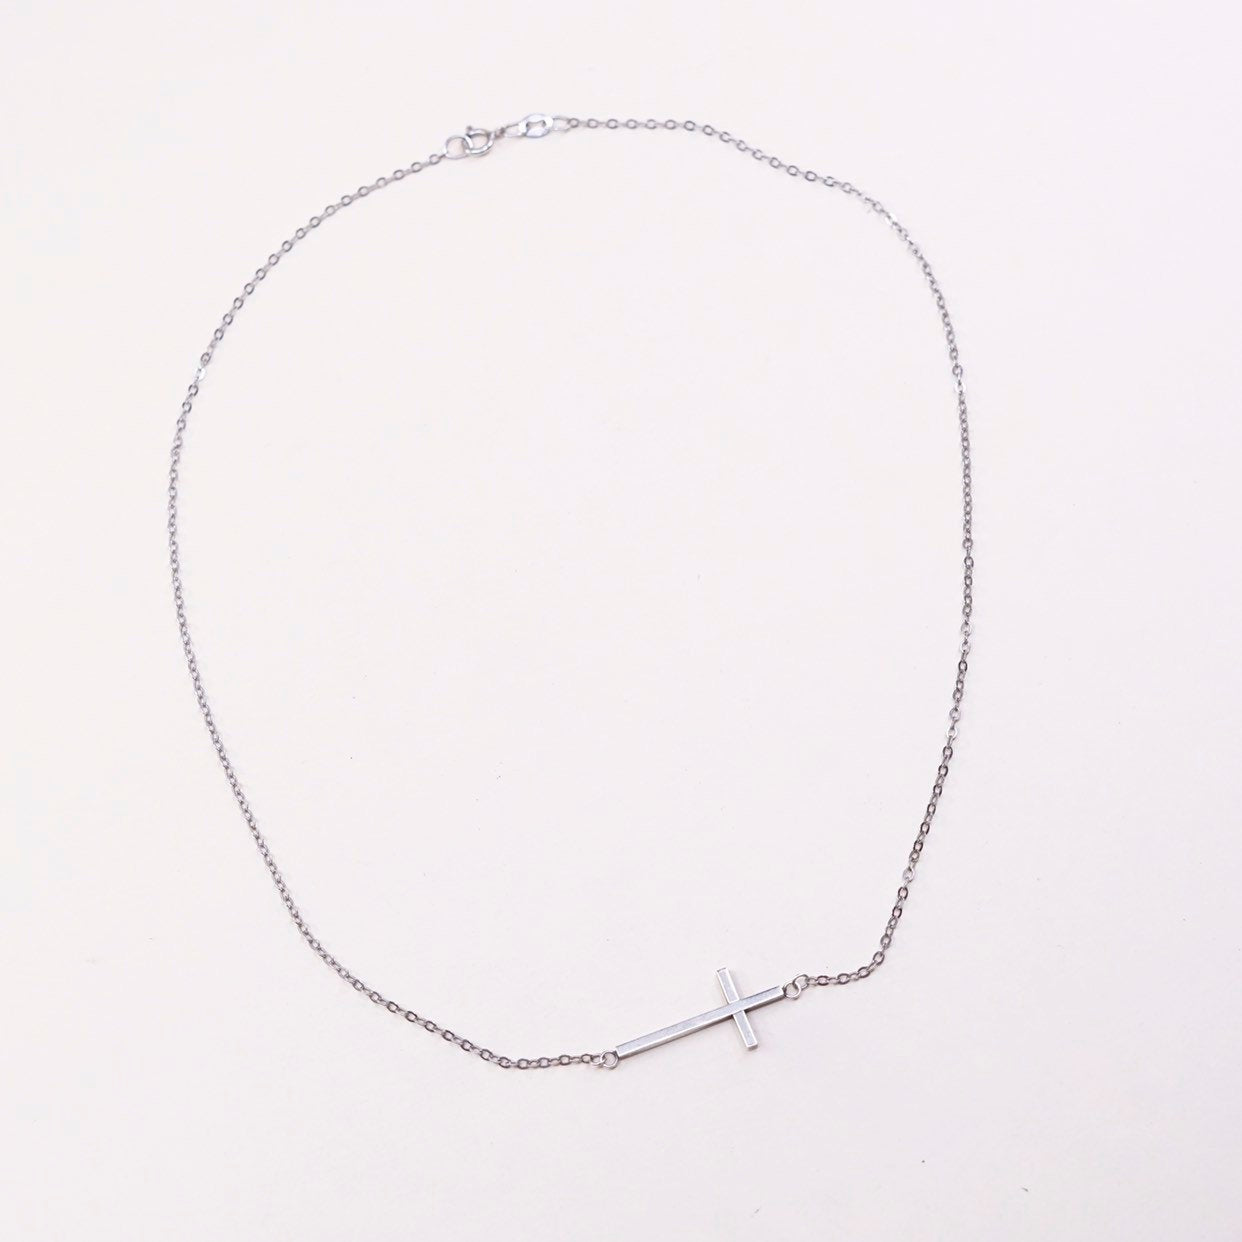 18”, vtg sterling silver flatten circle link chain w/ cross pendant, necklace